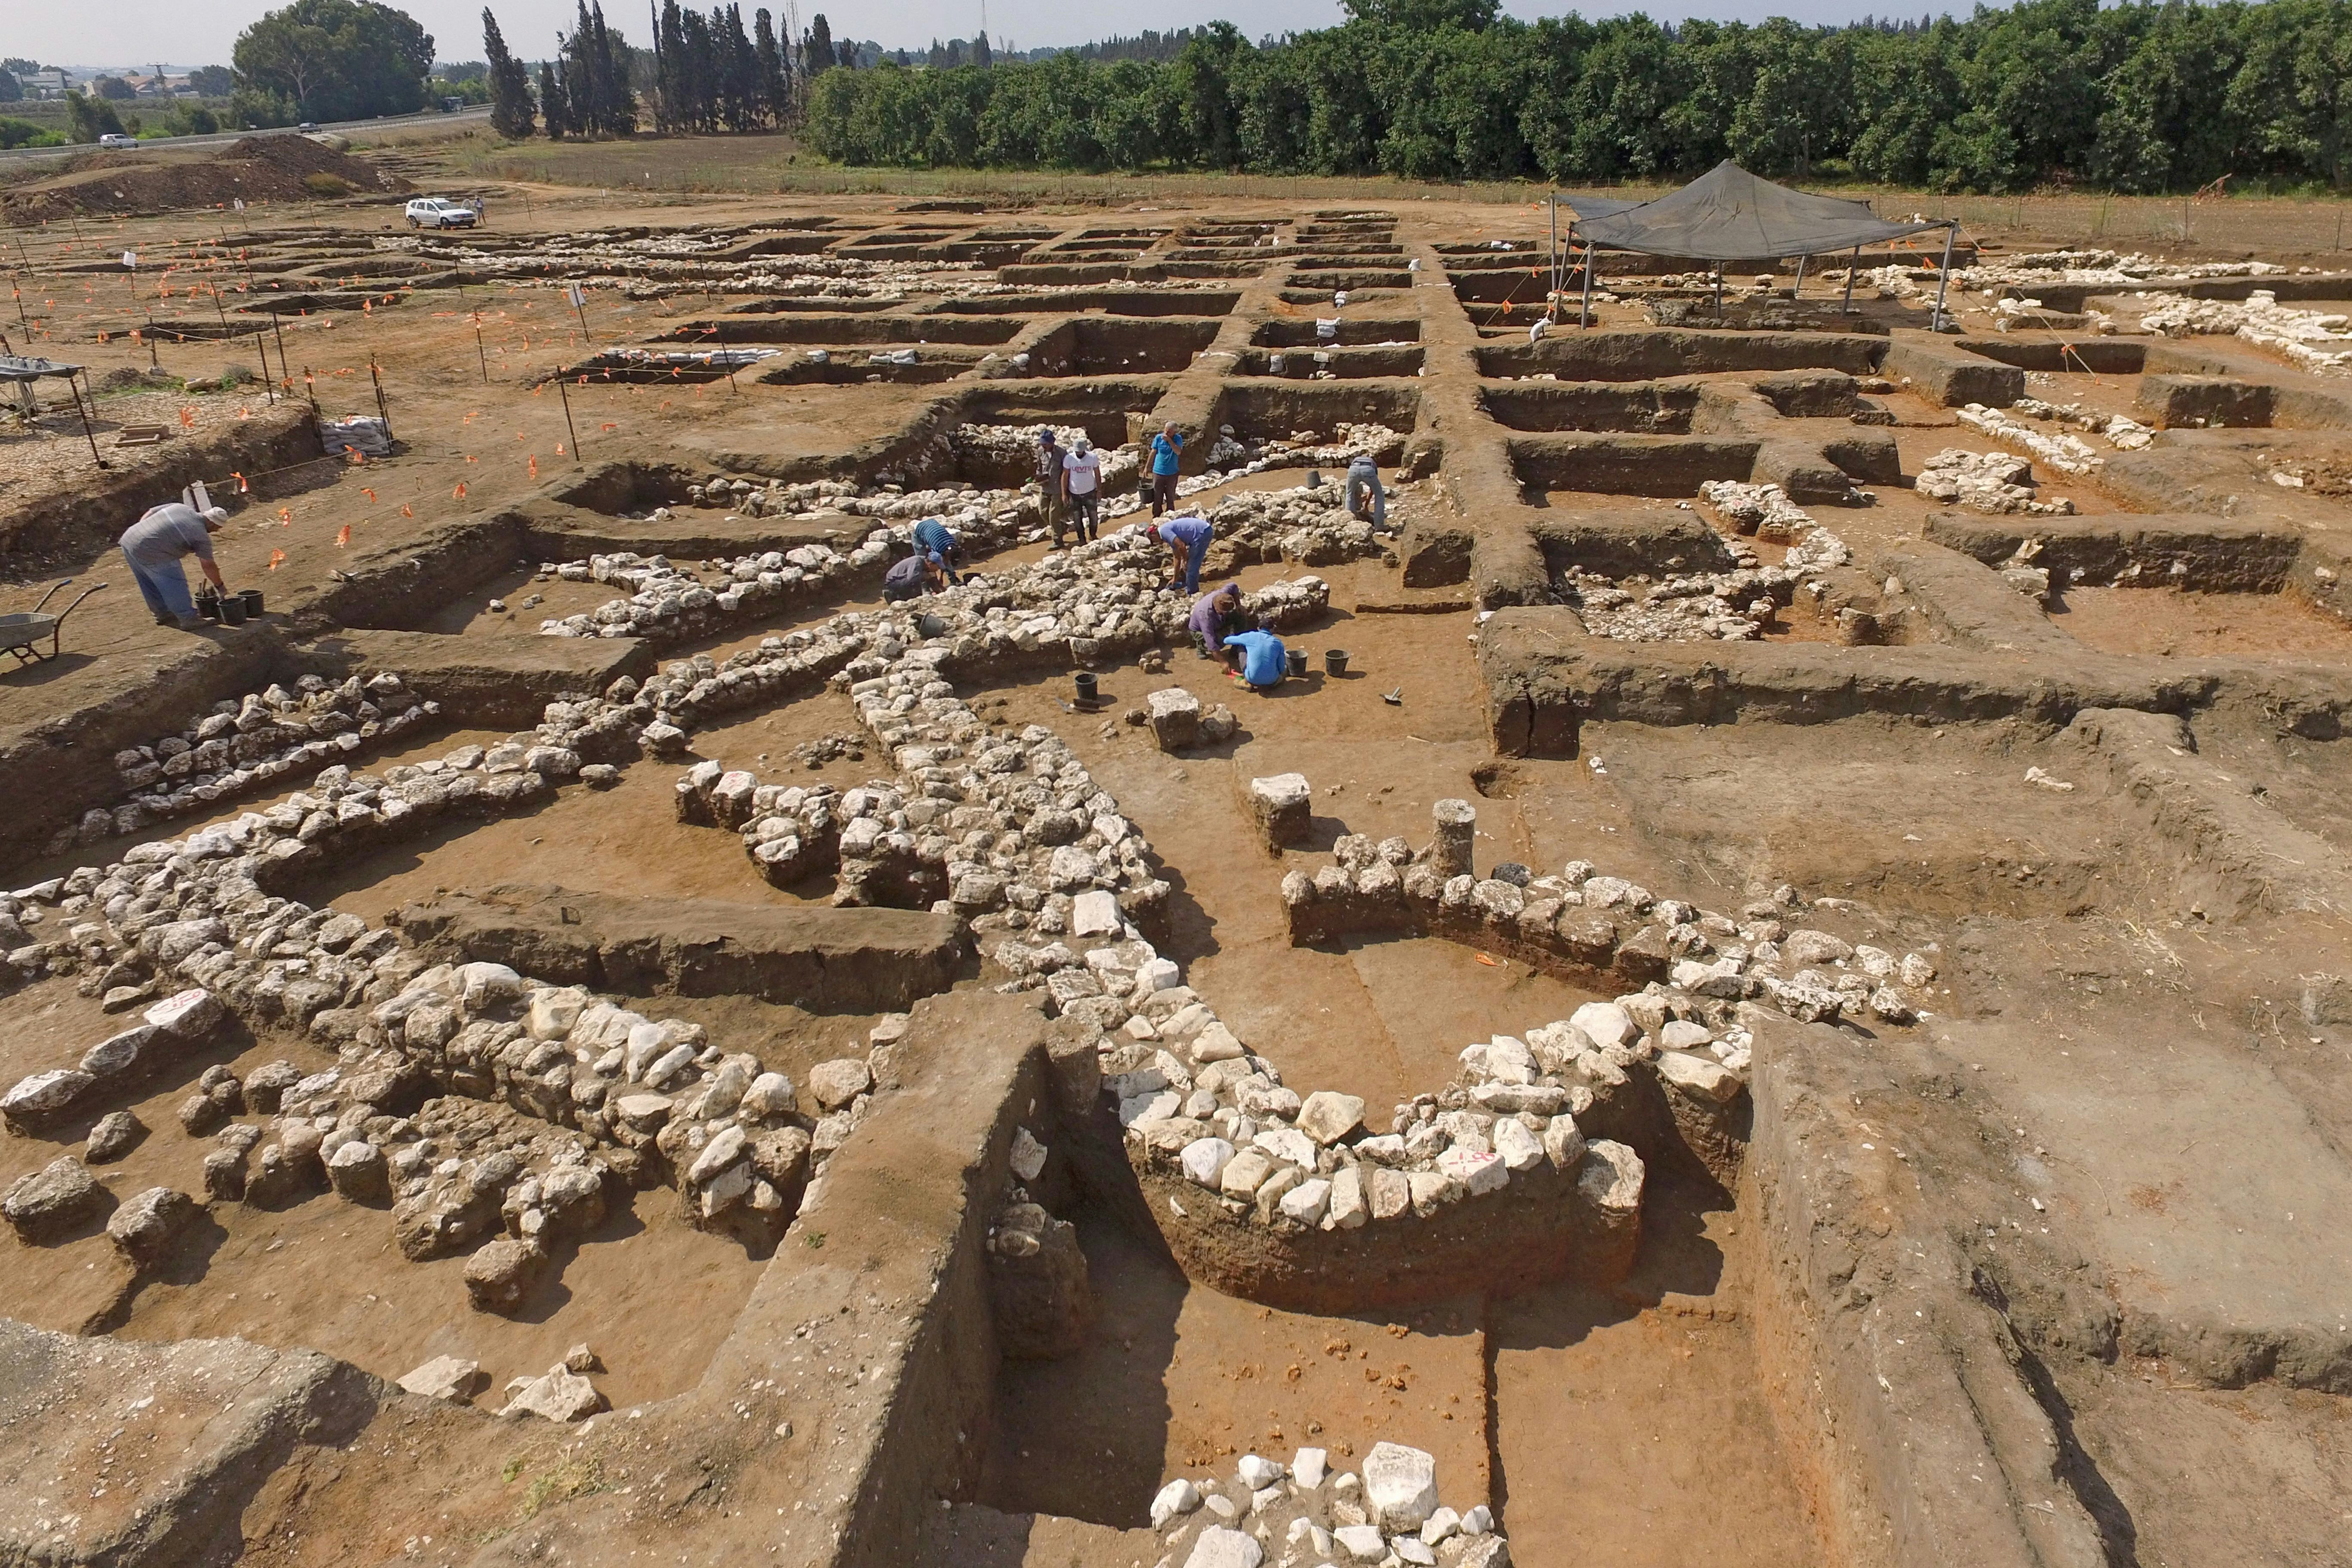 Israeli archaeologists work at the ancient site of En Esur (Ein Asawir)